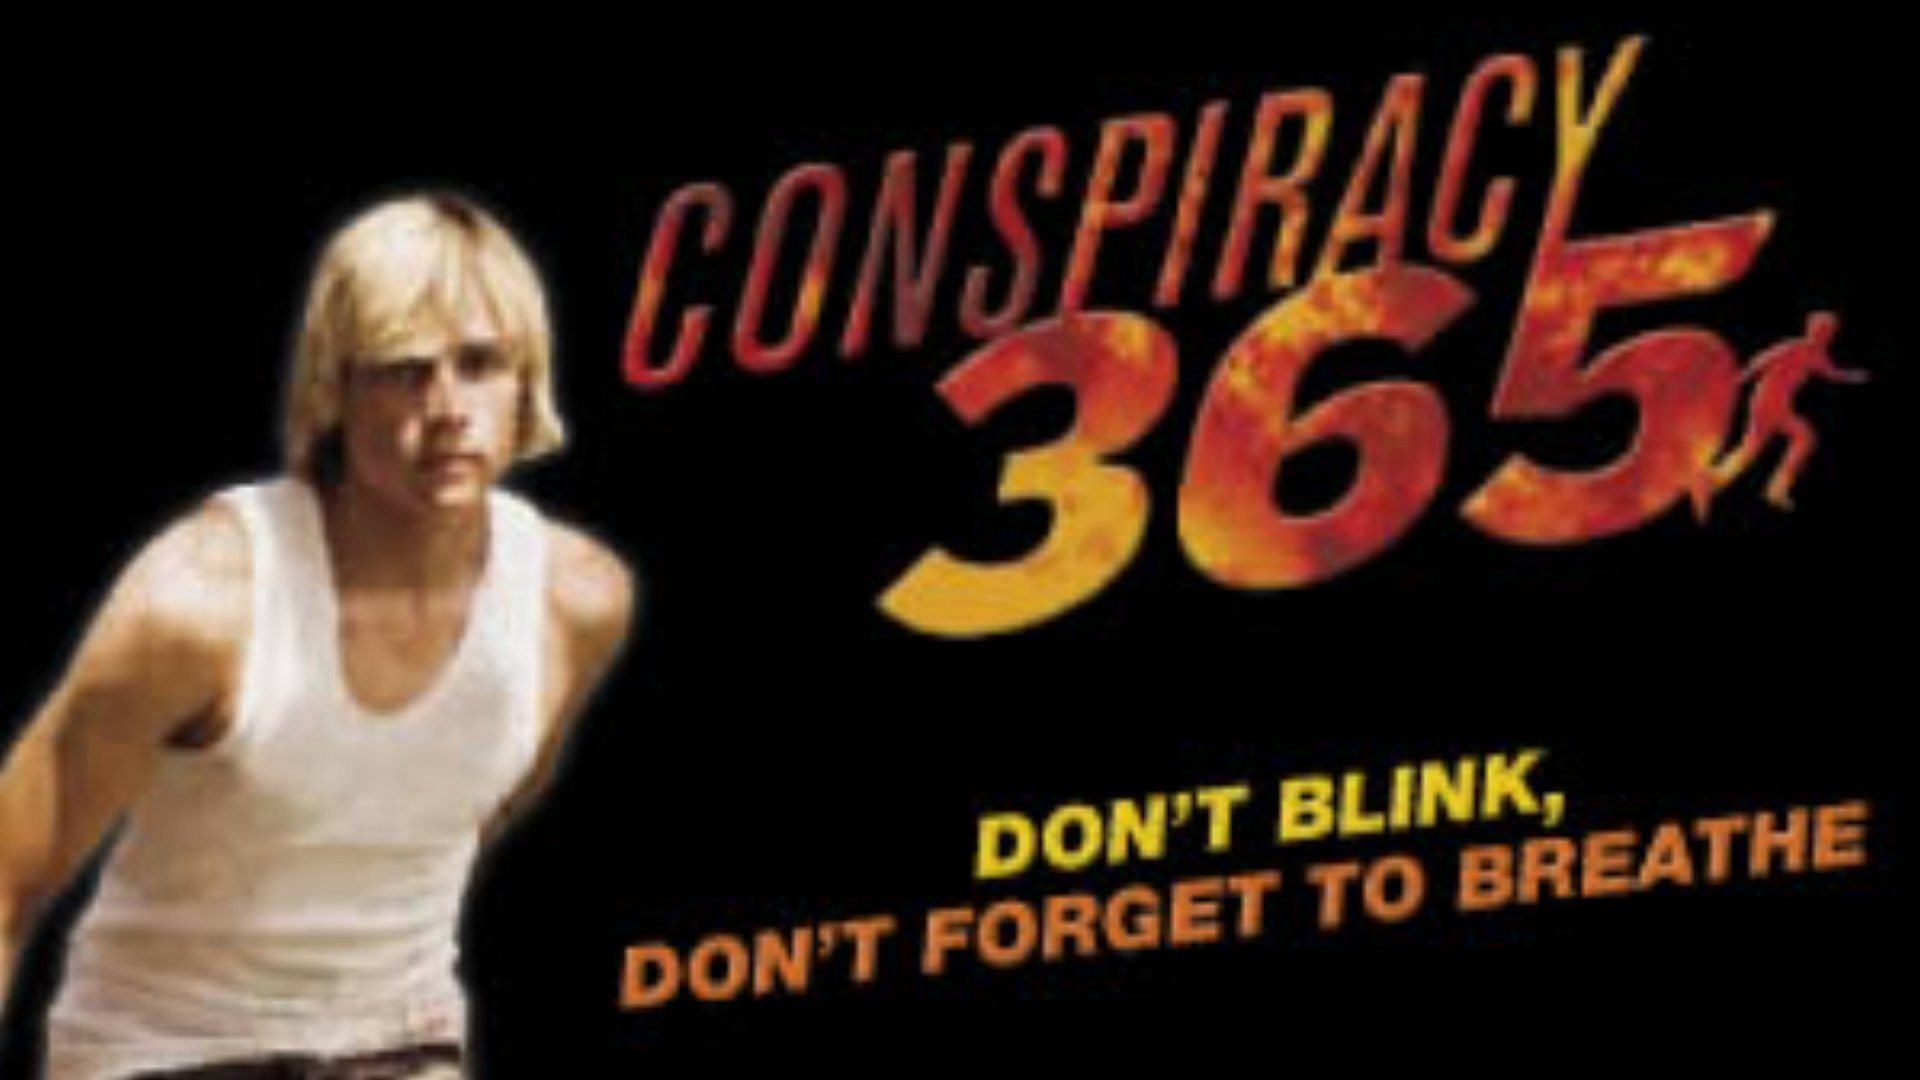 Show Conspiracy 365